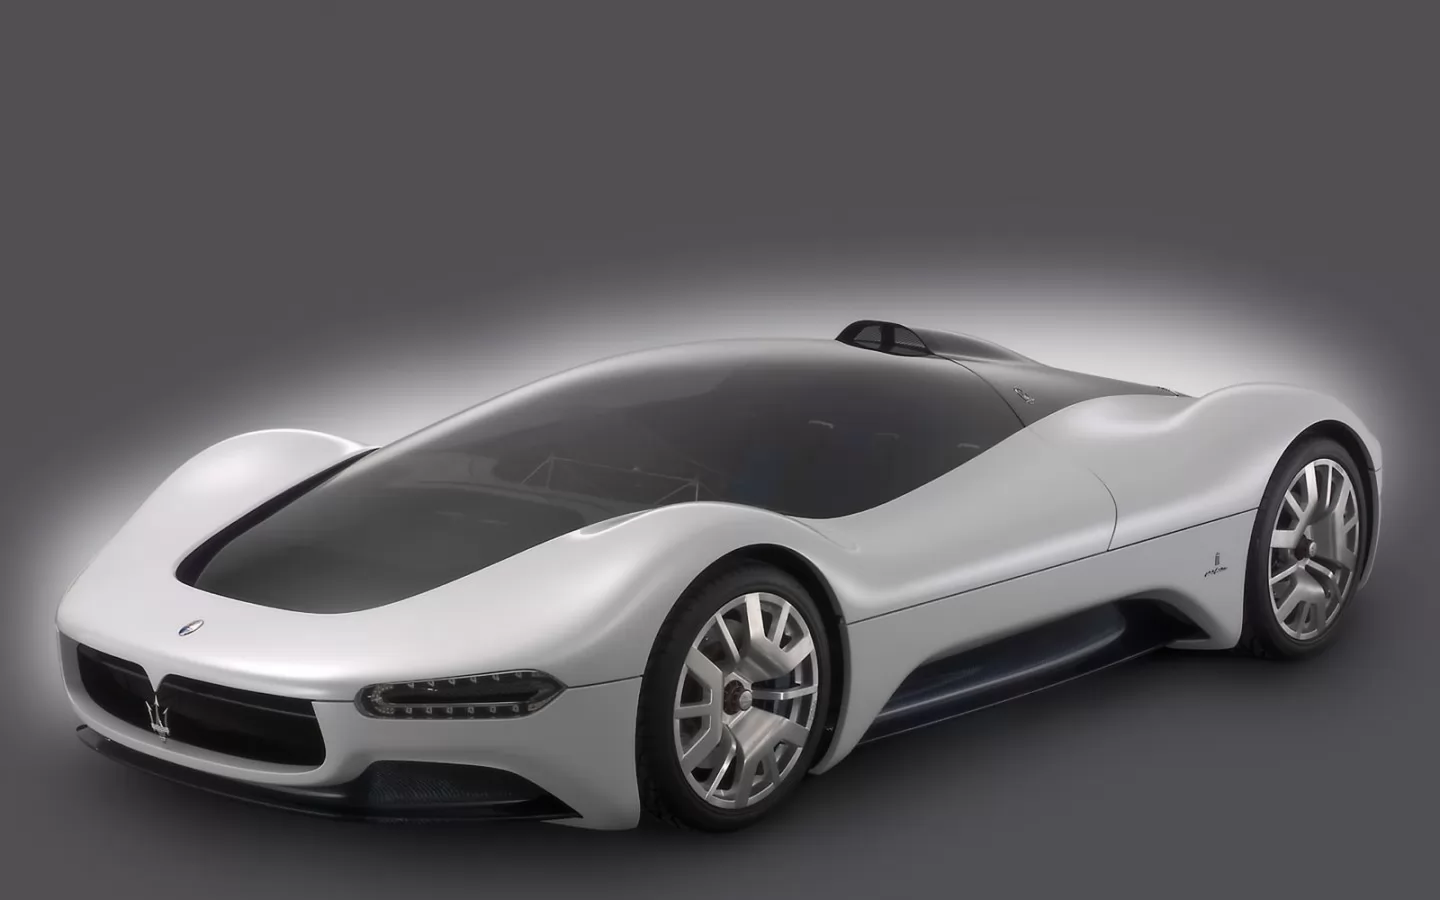 Pininfarina Maserati-Birdcage-Concept, best, cars, concept, Ferrari, grey, Pininfarina, sports cars, technics, white x